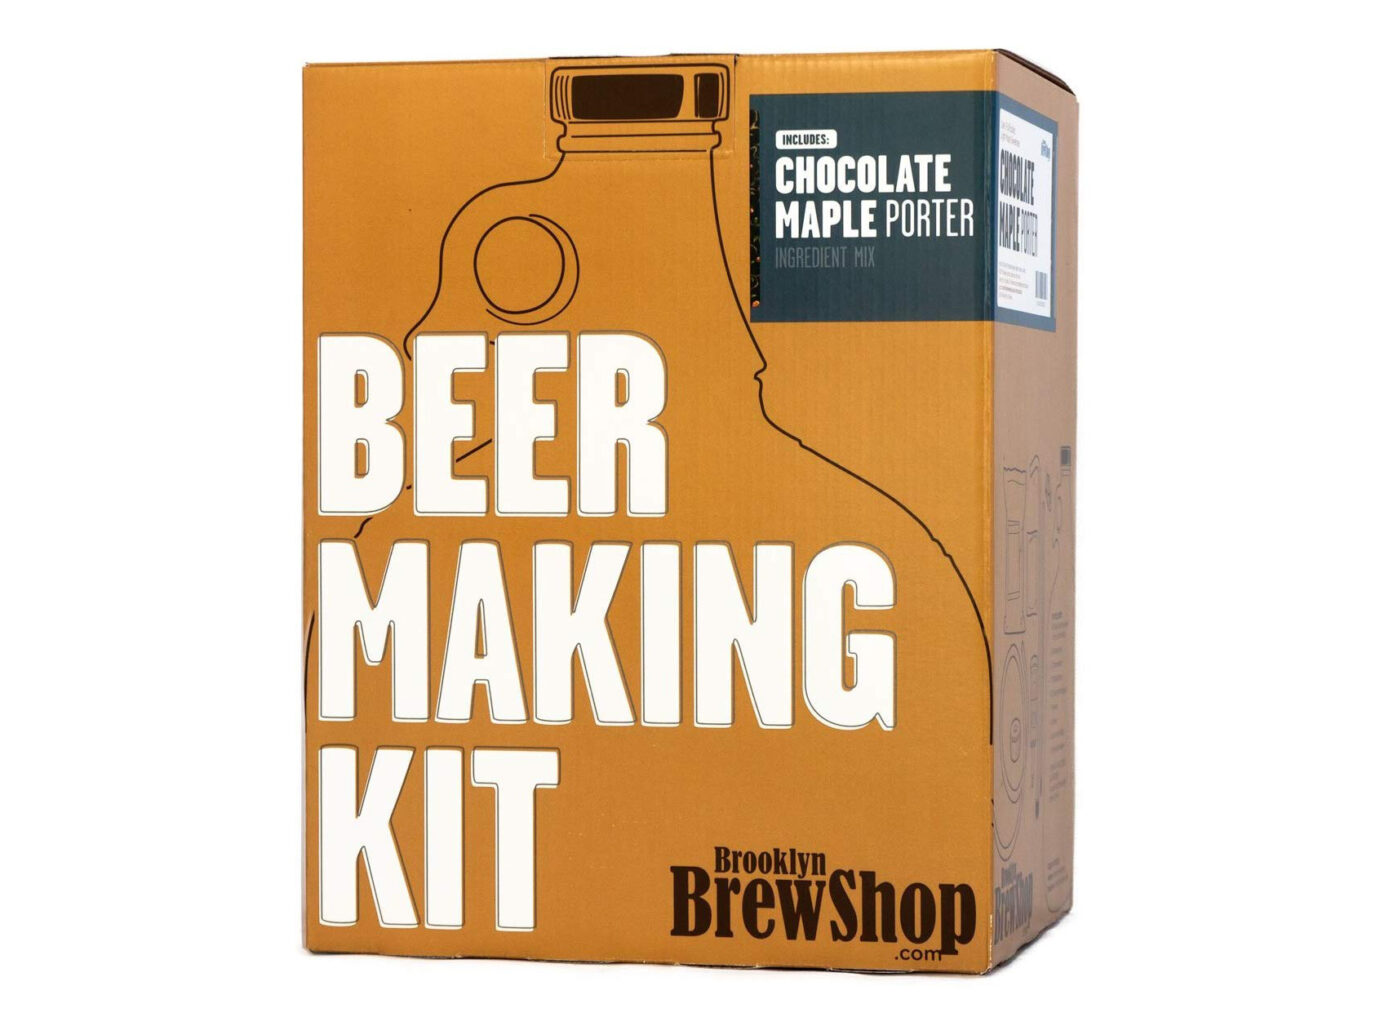 Brooklyn Brew Shop Chocolate Maple Porter Beer Making Kit